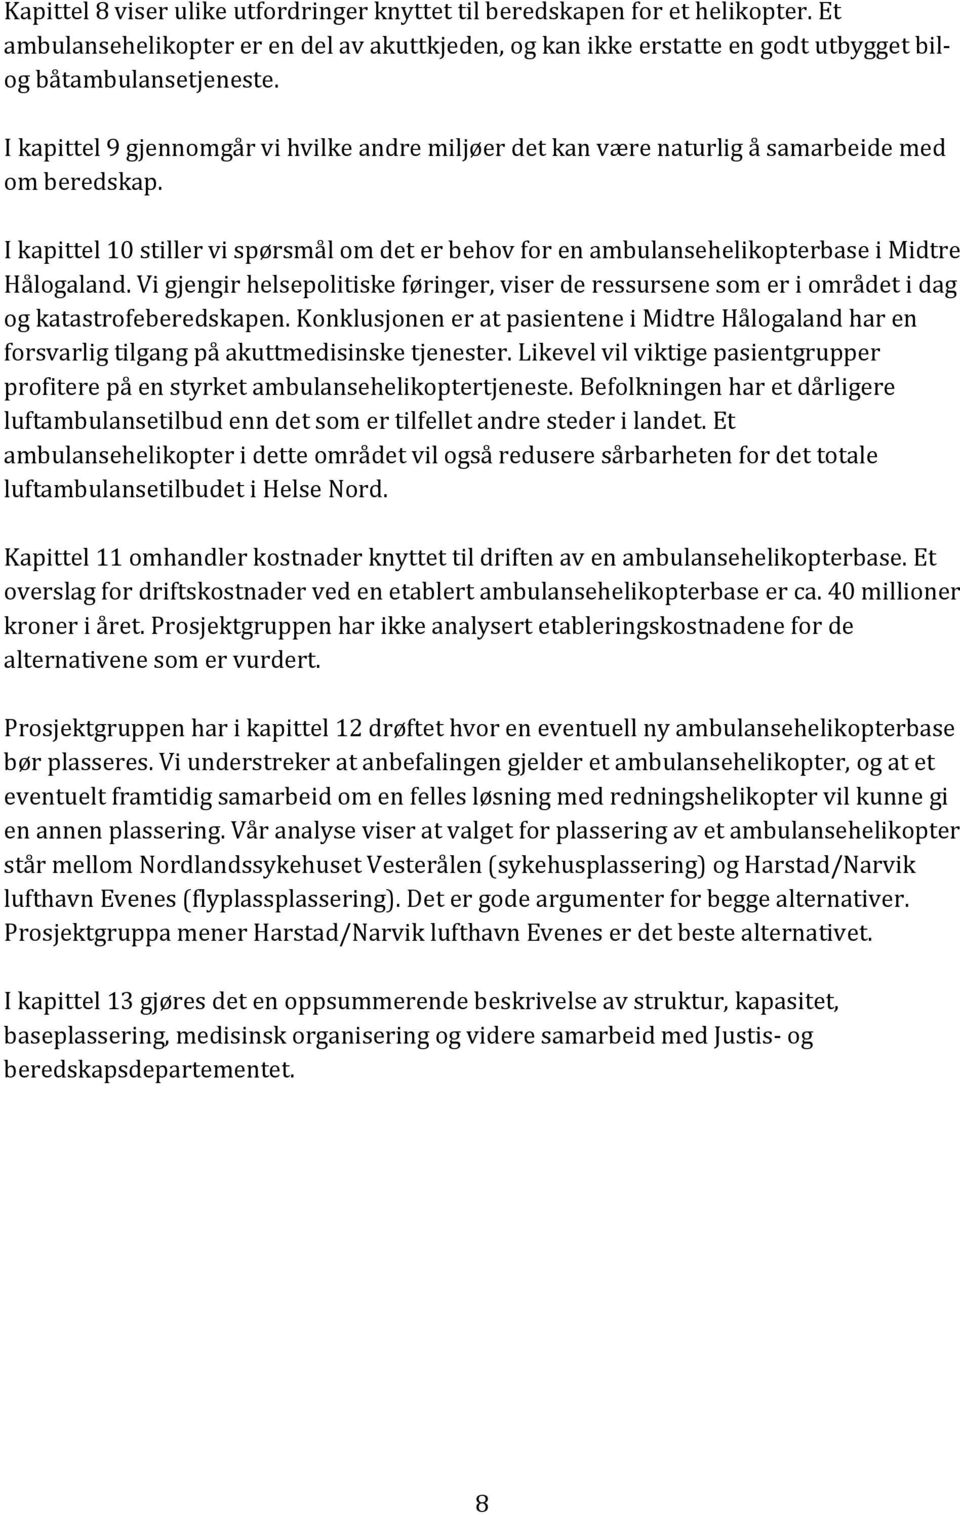 I kapittel 10 stiller vi spørsmål om det er behov for en ambulansehelikopterbase i Midtre Hålogaland.